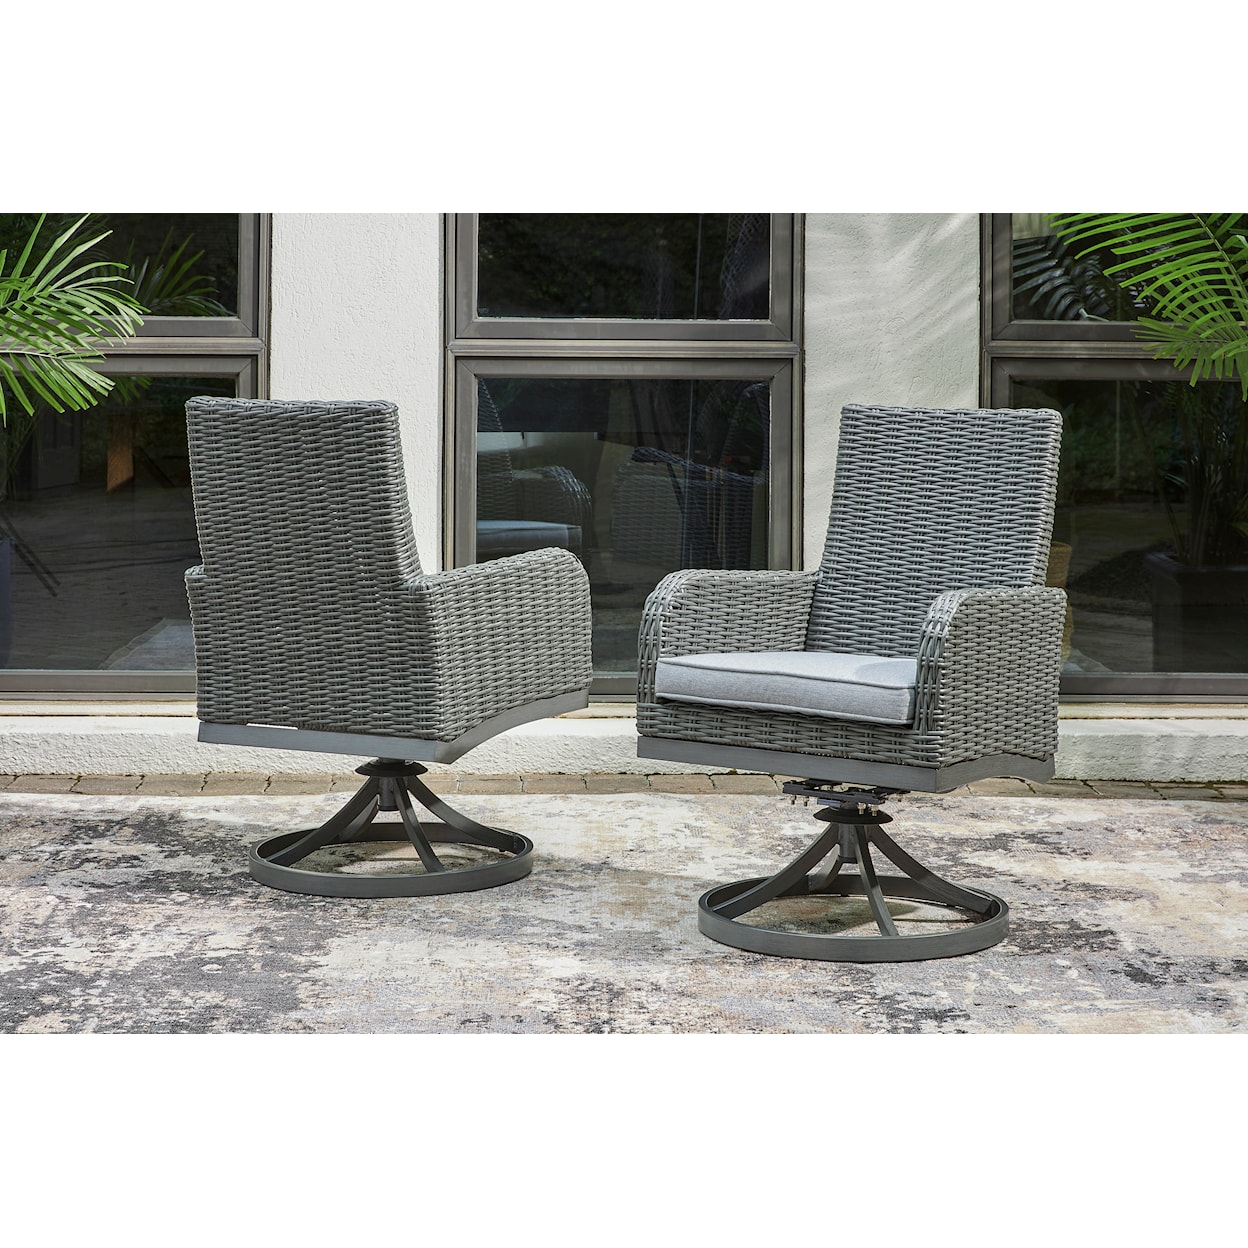 Ashley Furniture Signature Design Elite Park Swivel Chair with Cushion (Set of 2)